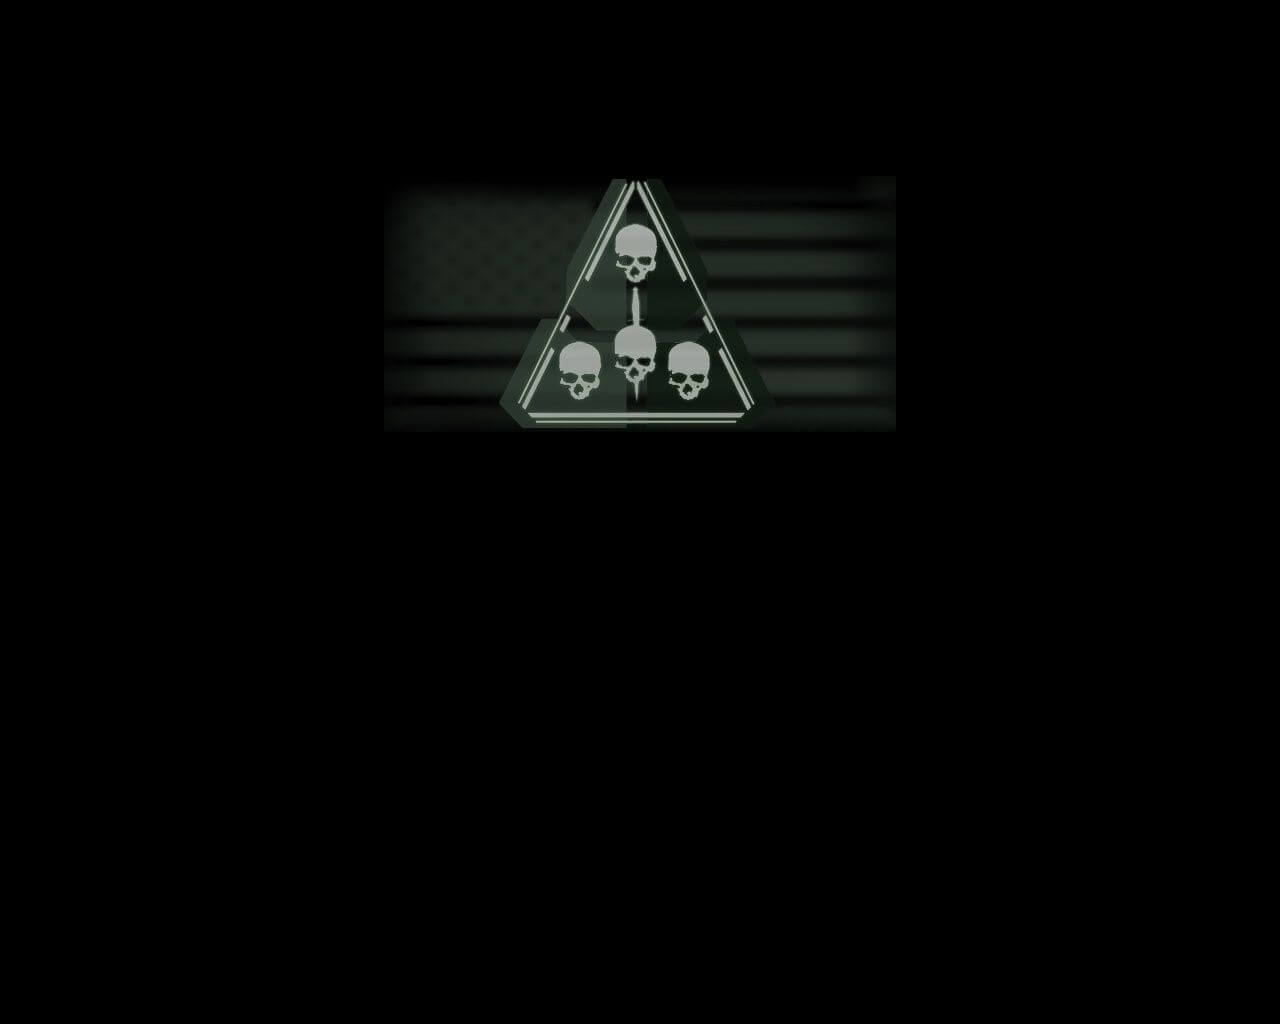 Blacksite Area 51 Icon by habanacoregamer on DeviantArt